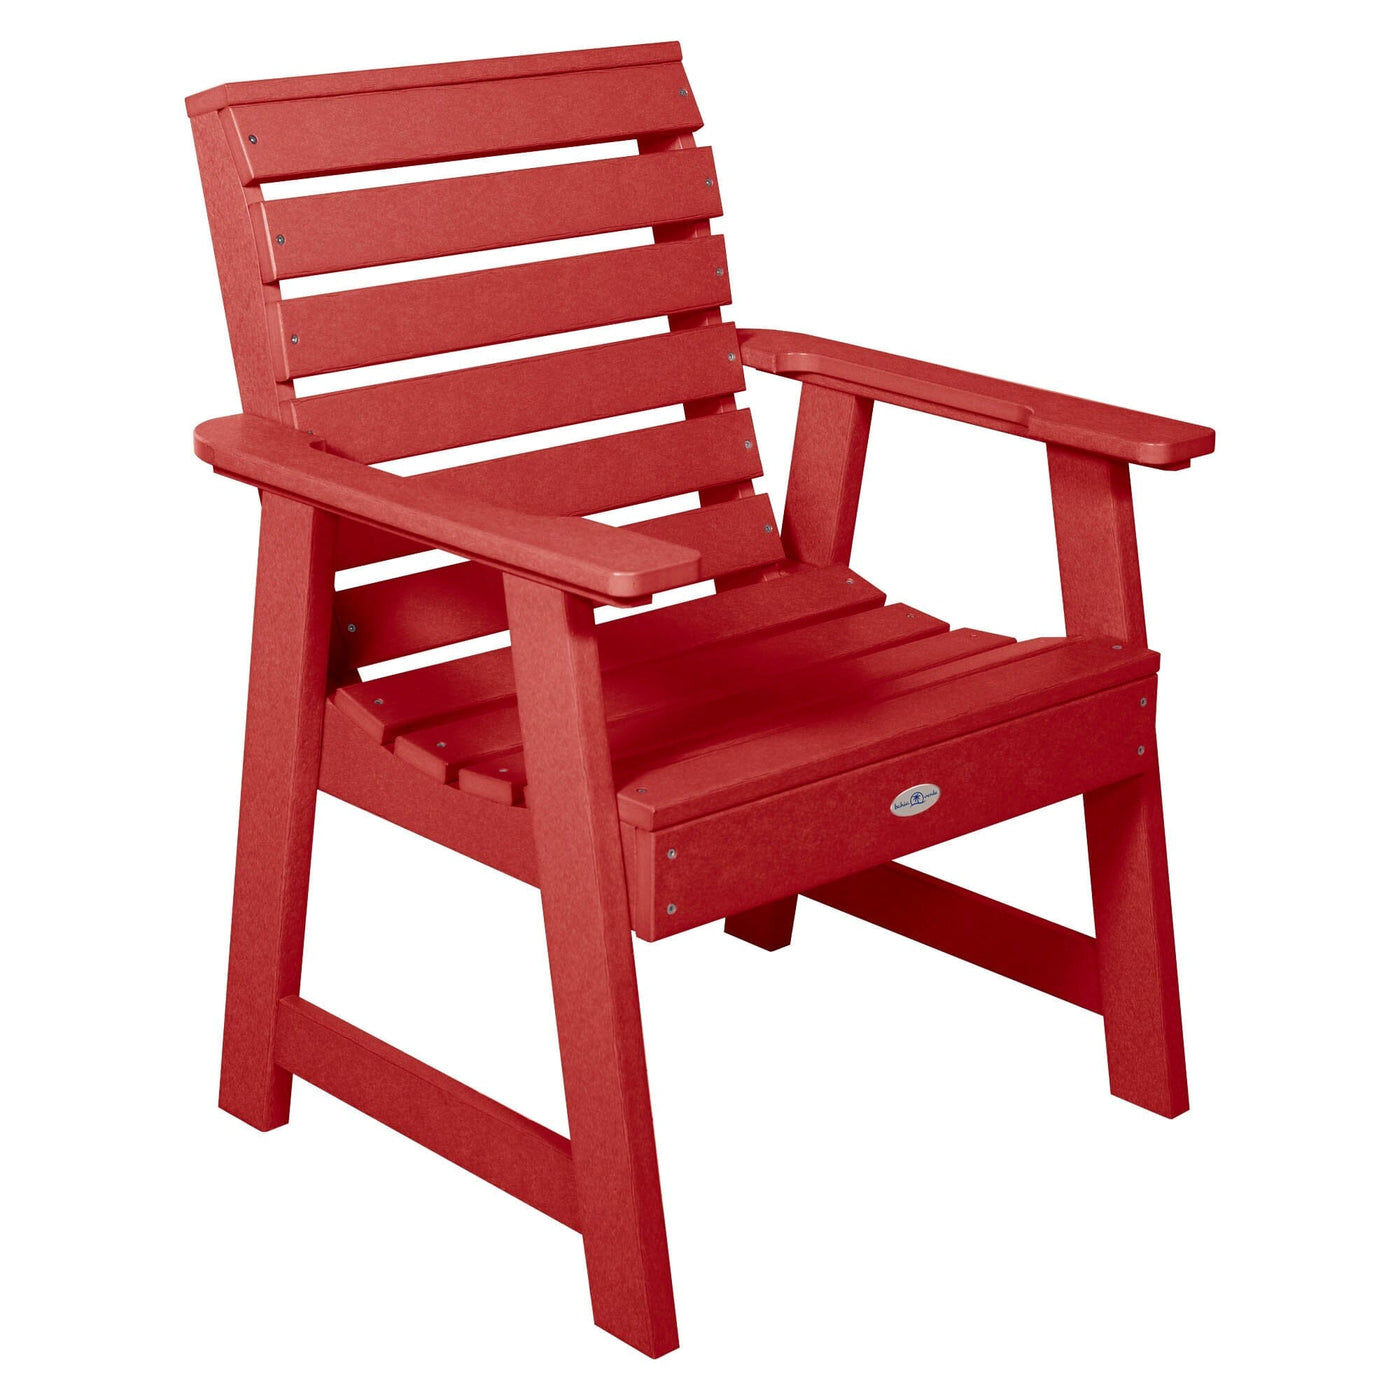 Riverside Garden Chair Chair Bahia Verde Outdoors Boathouse Red 